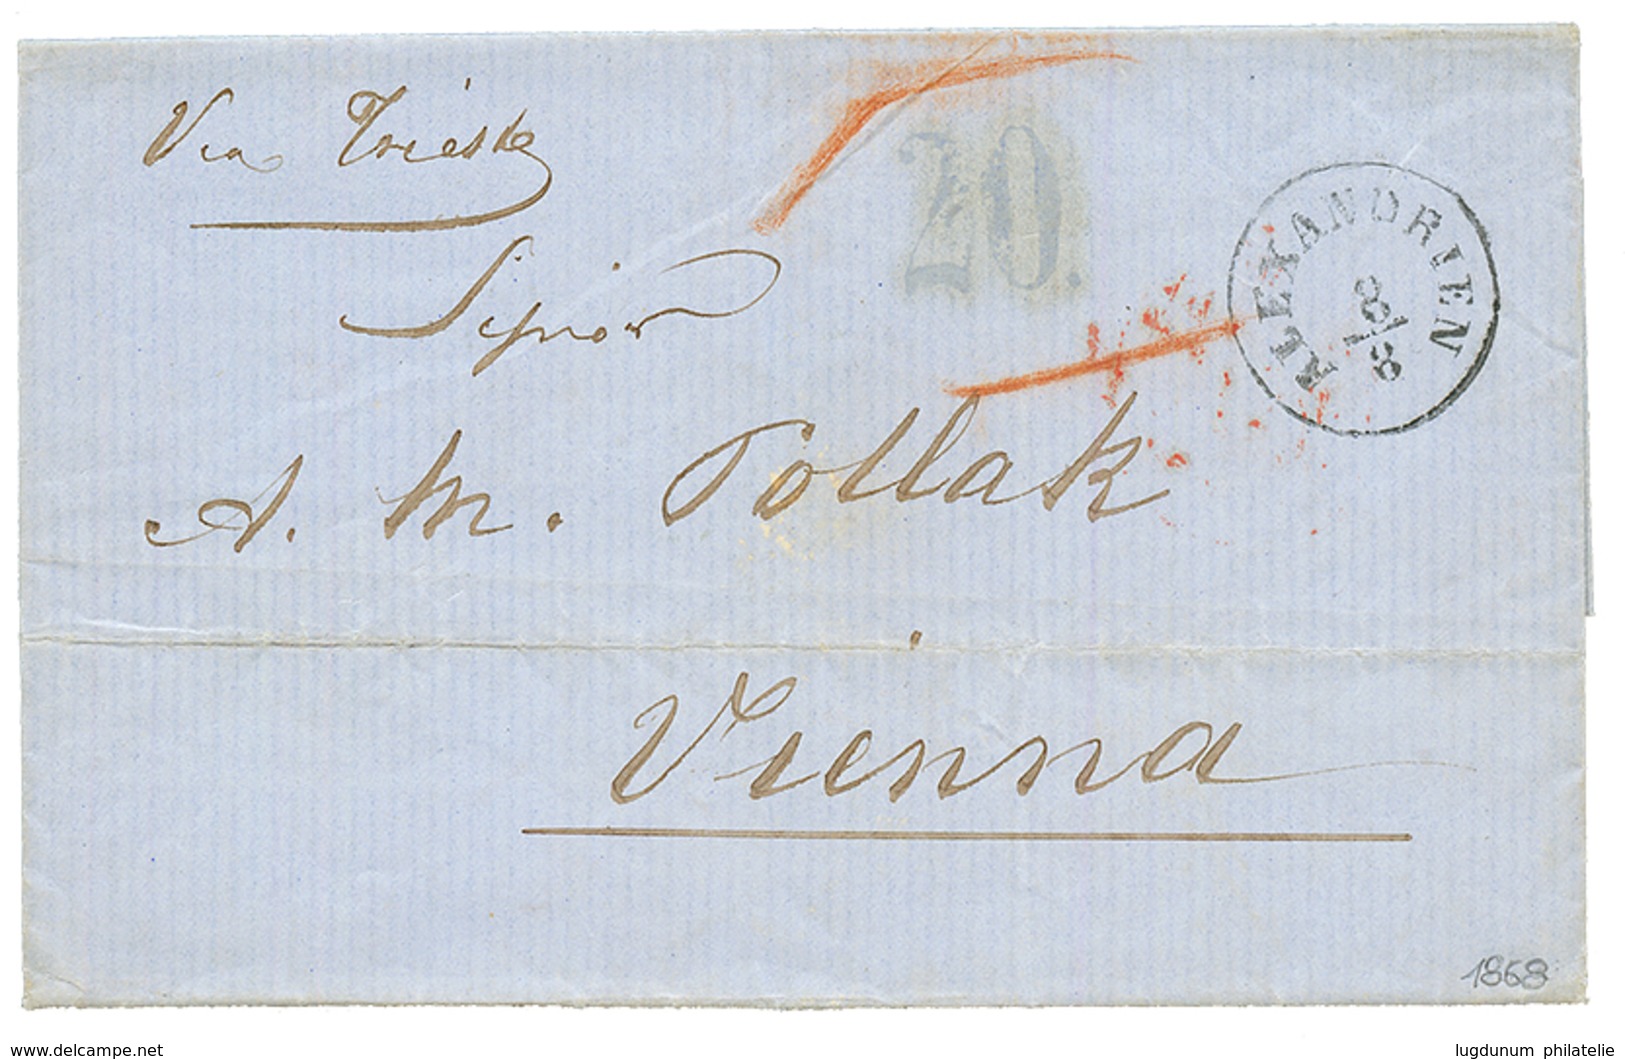 ALEXANDRIA : 1868 ALEXANDRIEN + "20" Tax Marking In Blue On Entire Letter Via TRIESTE To AUSTRIA. Superb. - Eastern Austria